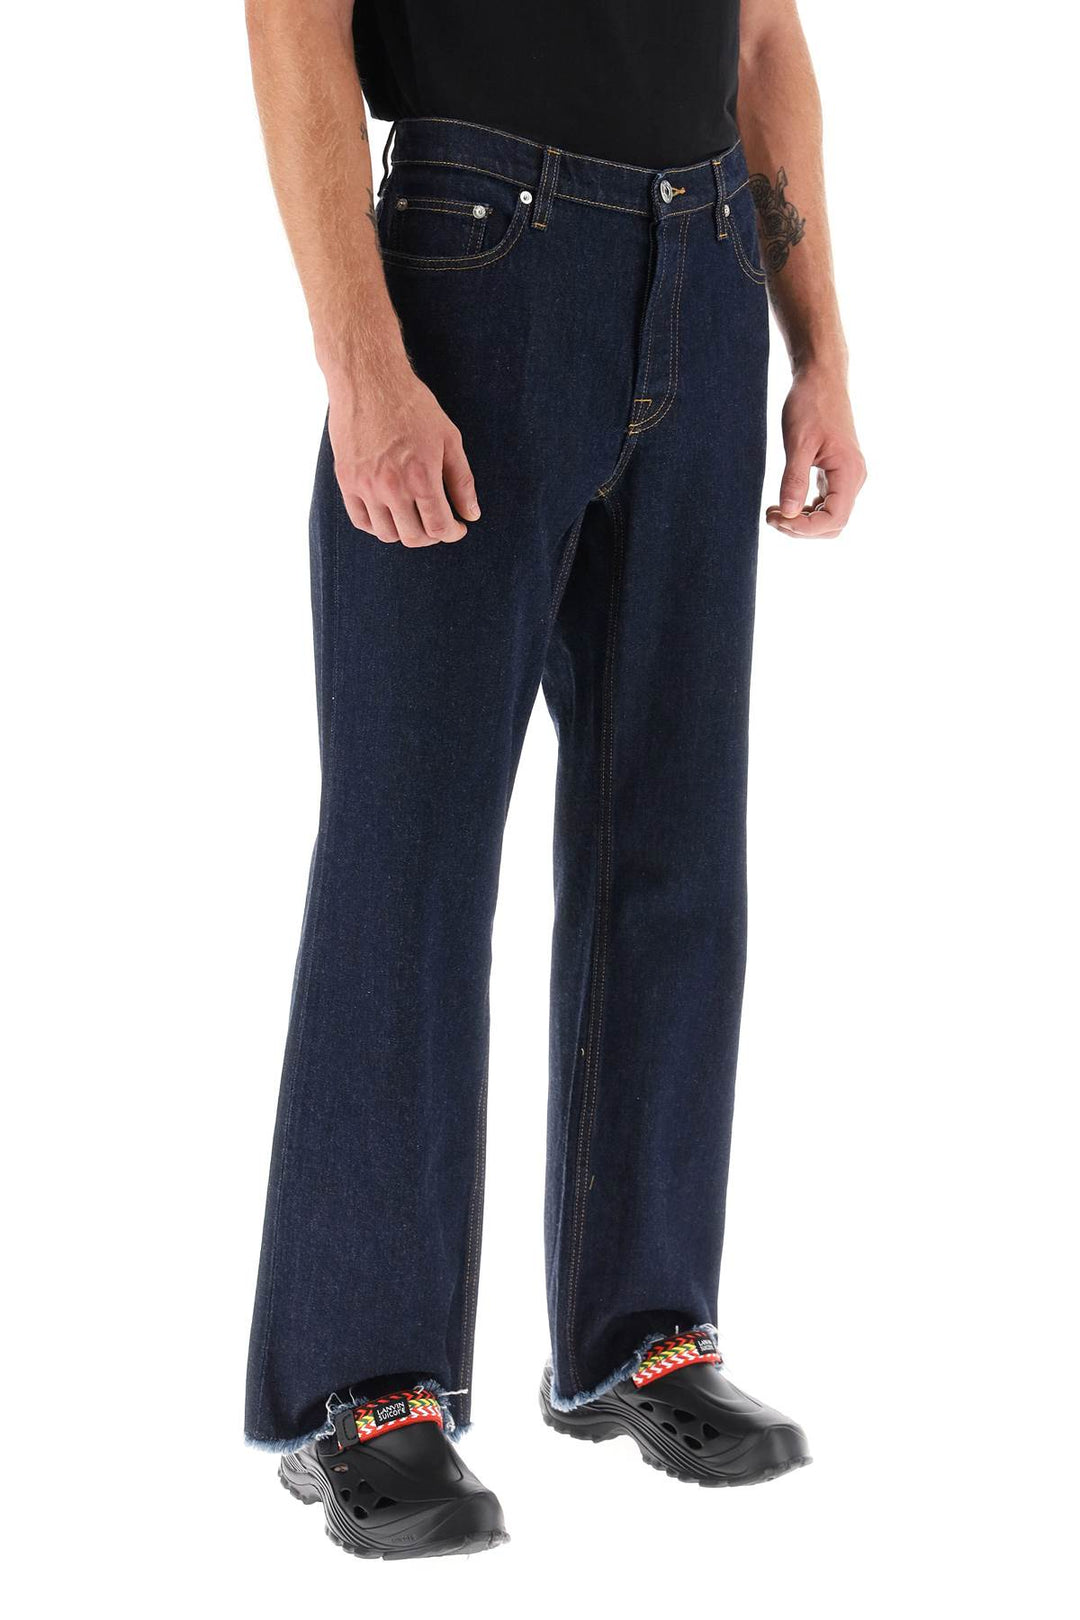 Lanvin jeans with frayed hem-1